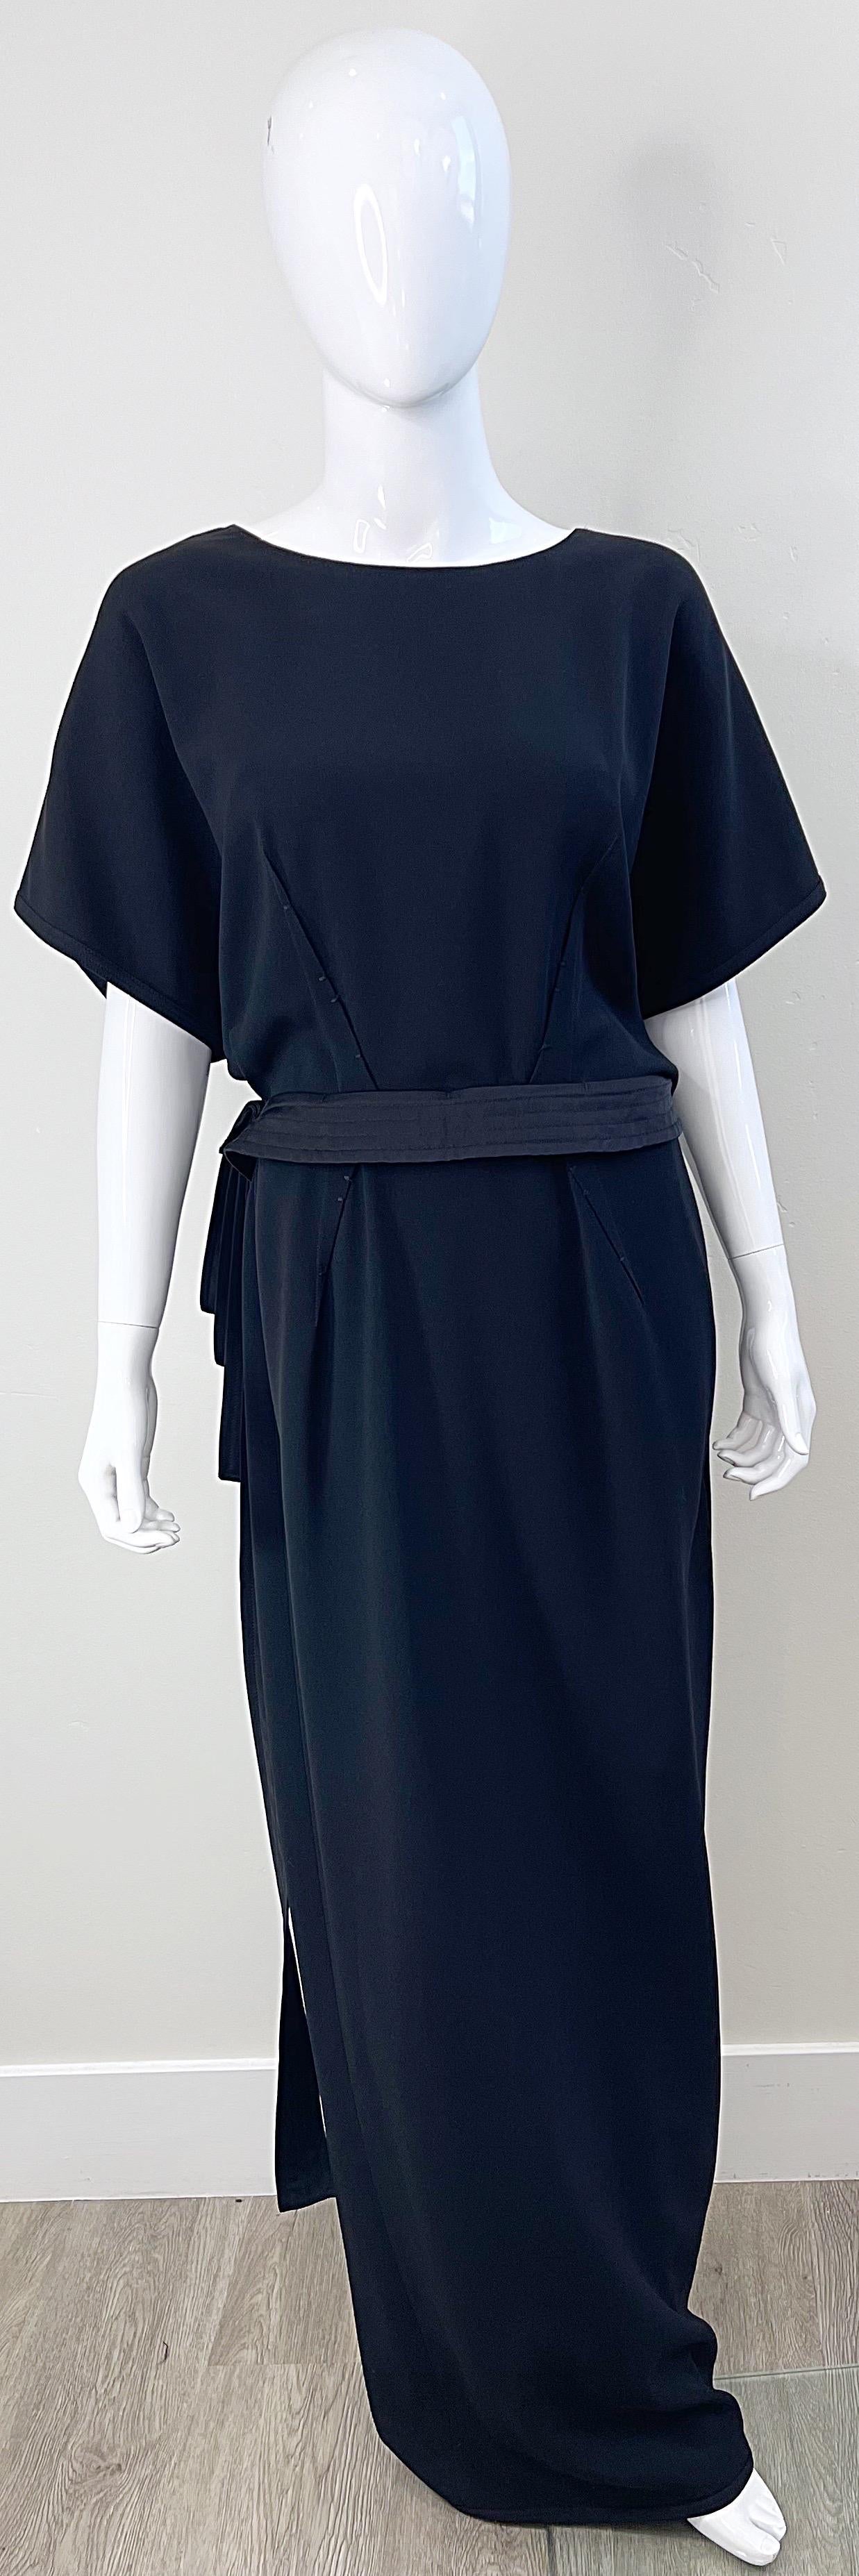 NWT Gianfranco Ferre 2000s Size 44 / 8 - 10 Black Dolman Sleeve Gown Maxi Dress For Sale 16